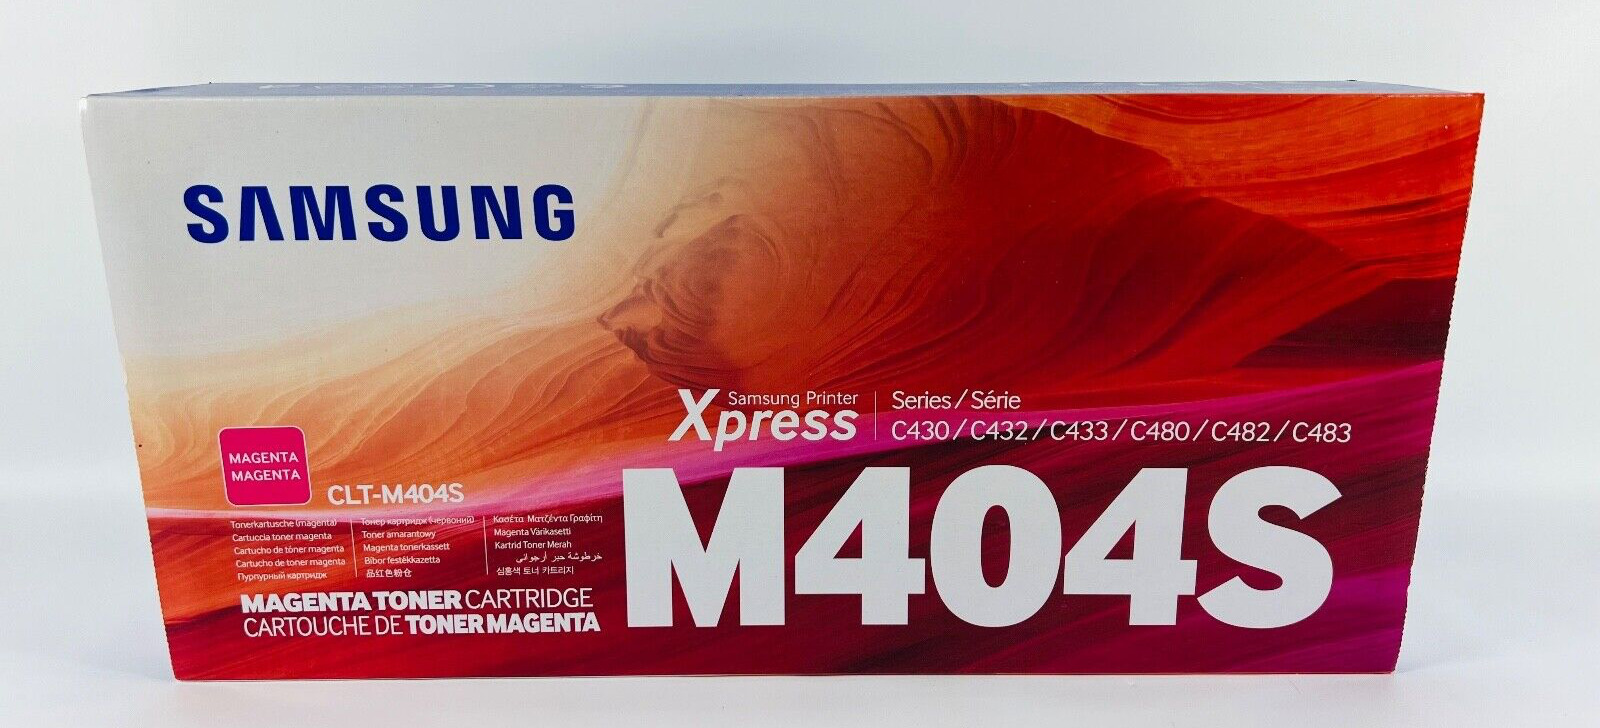 Genuine Samsung CLT-M404S Magenta Printer Toner Cartridge/Brand NEW SEALED BOX